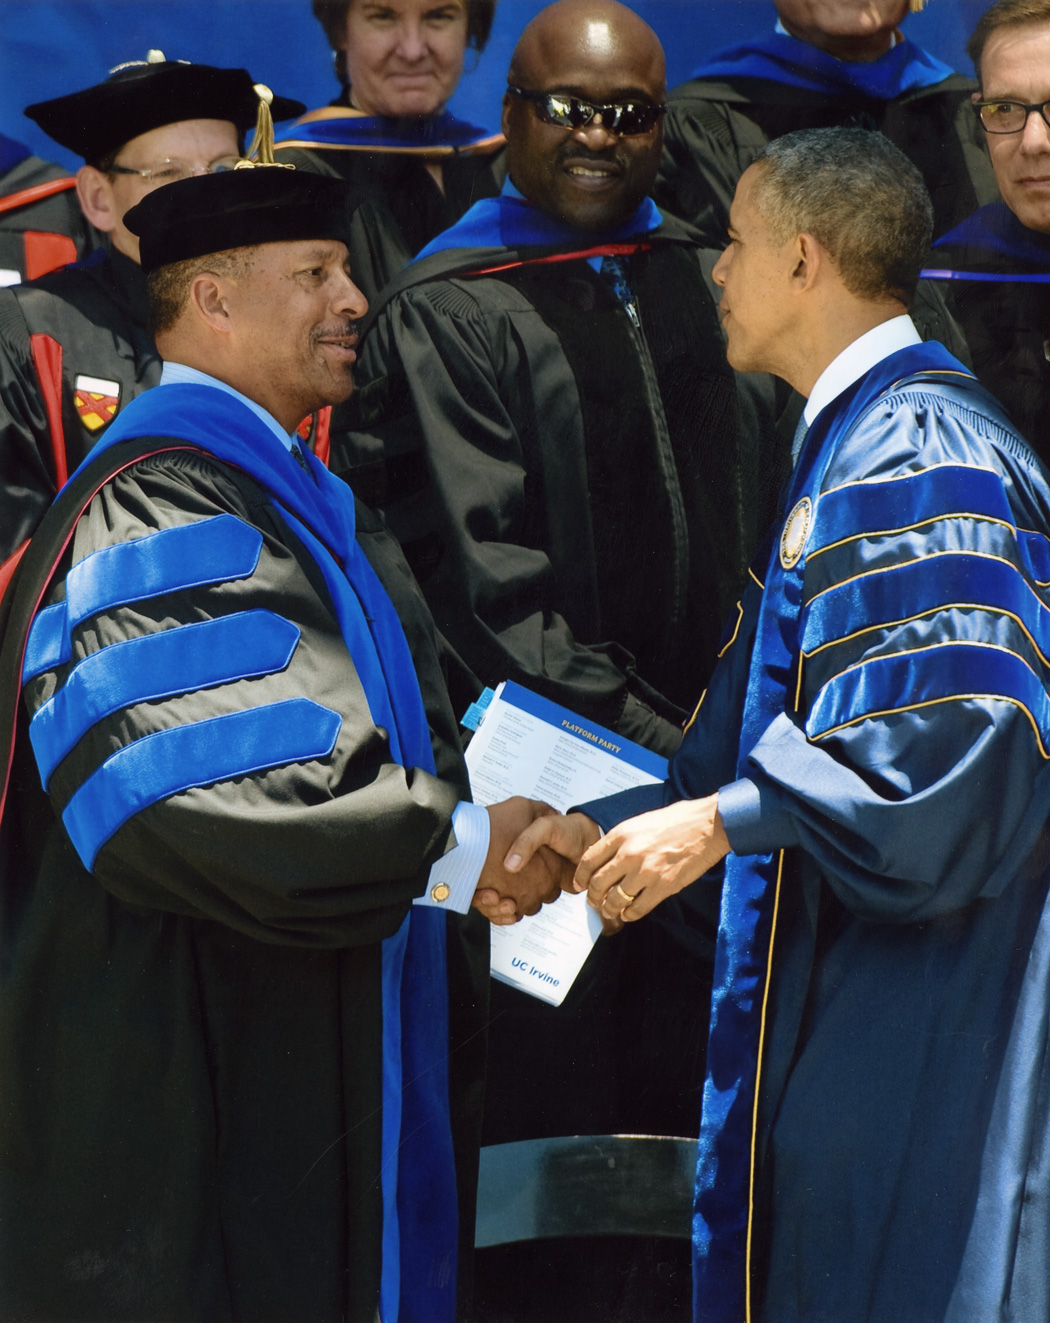 Dr. Thomas Parham with President Barack Obama, UC Irvine commencement, 2014.